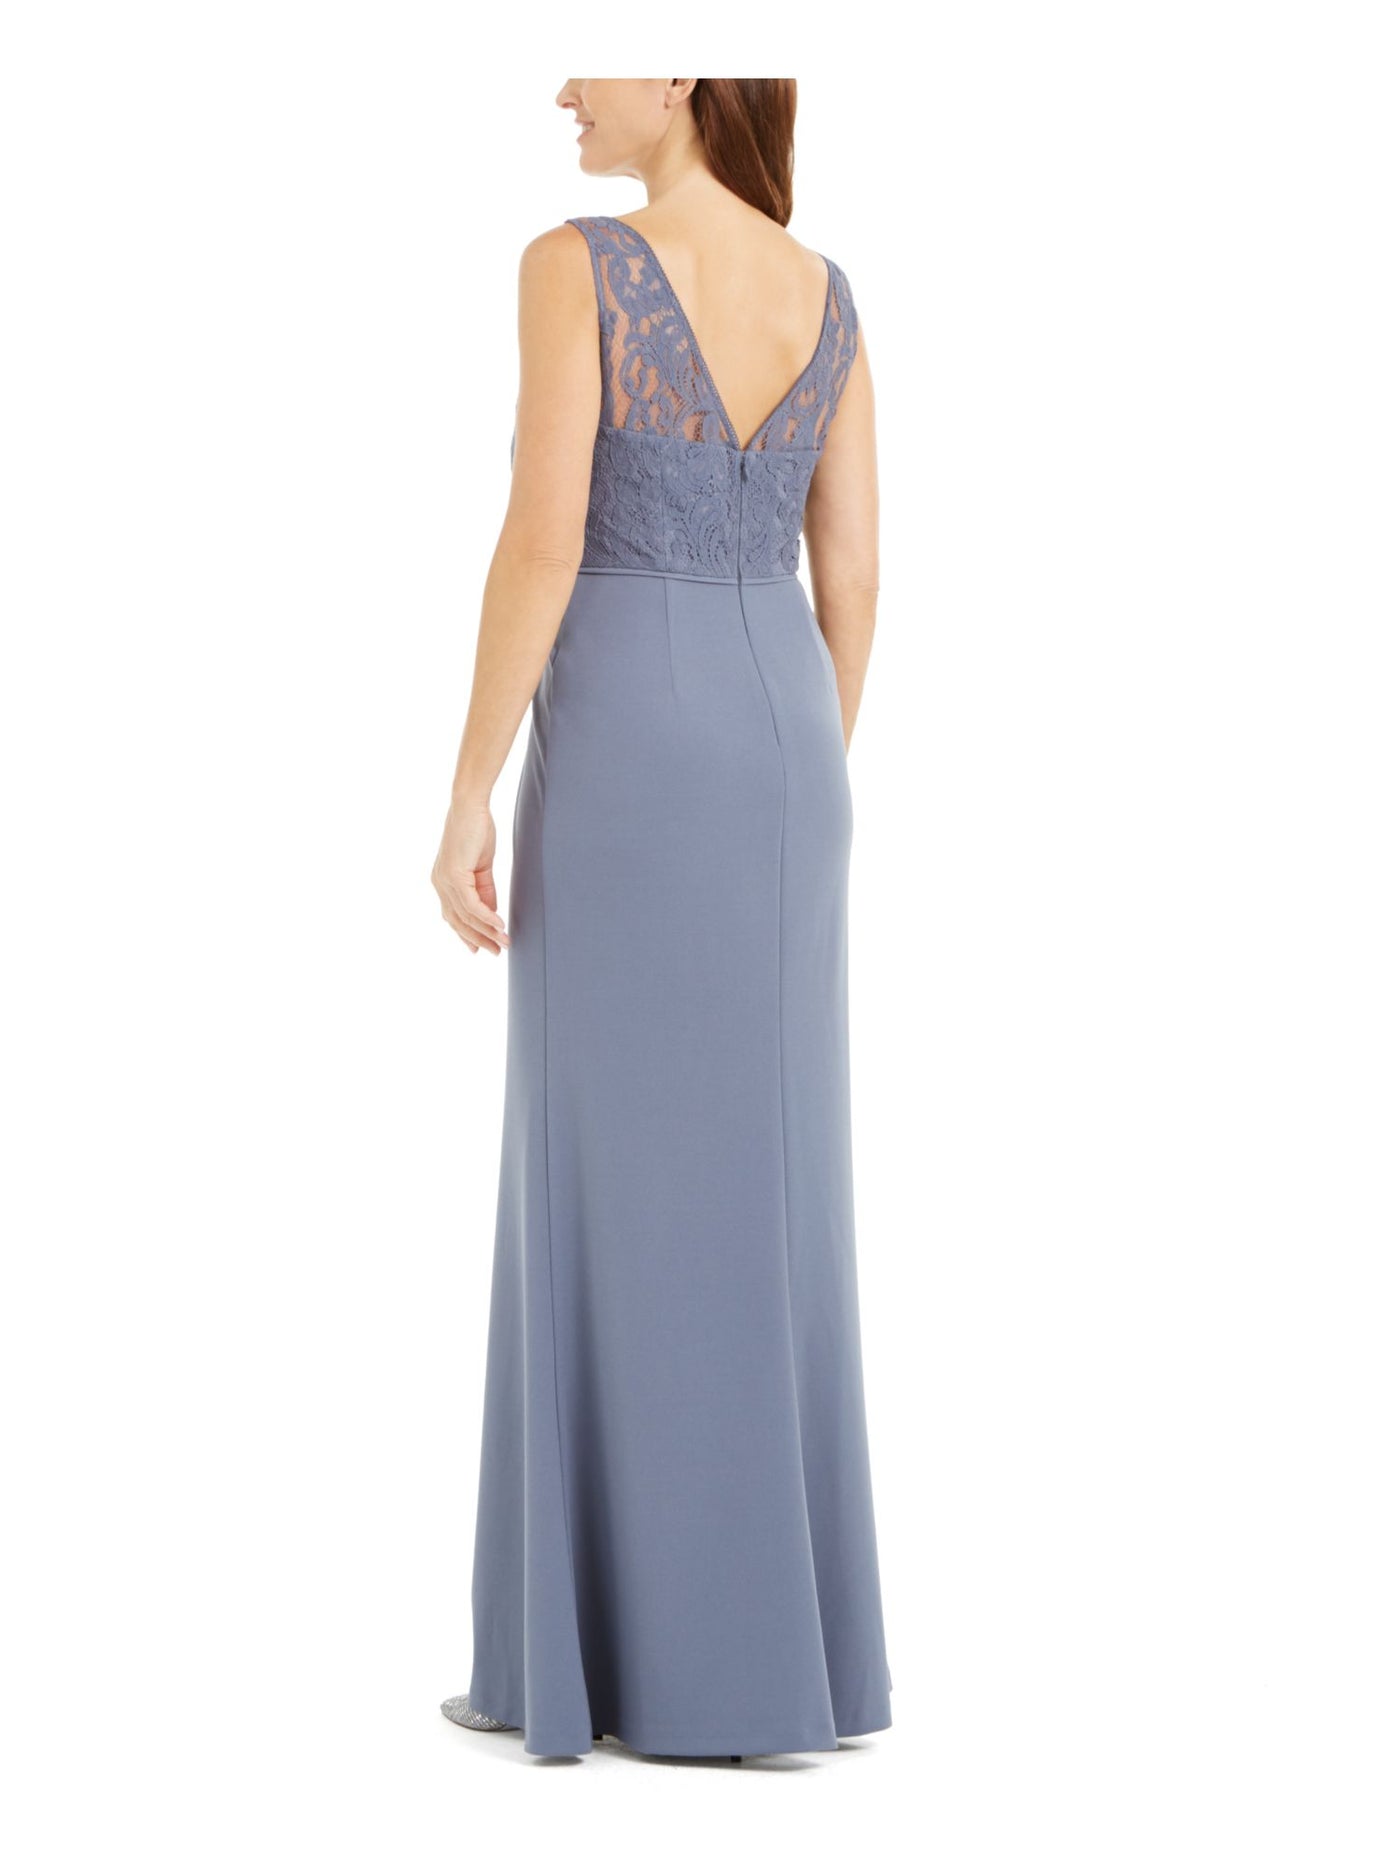 ADRIANNA PAPELL Womens Light Blue Slitted Zippered Illusion Gown Sleeveless V Neck Full-Length Formal Dress 2